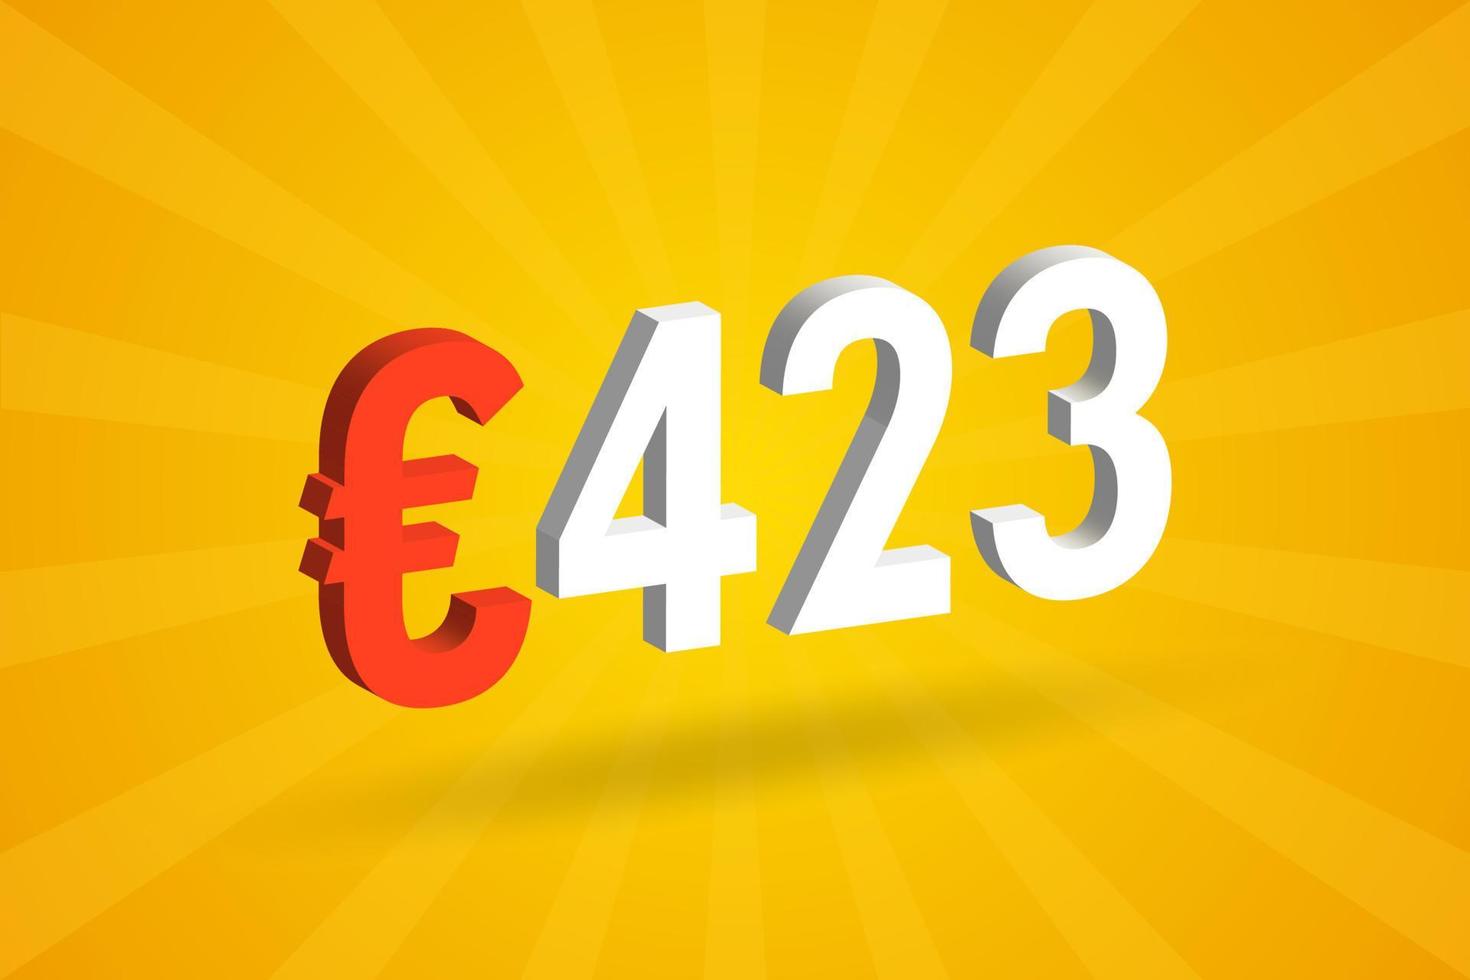 423 Euro Currency 3D vector text symbol. 3D 423 Euro European Union Money stock vector